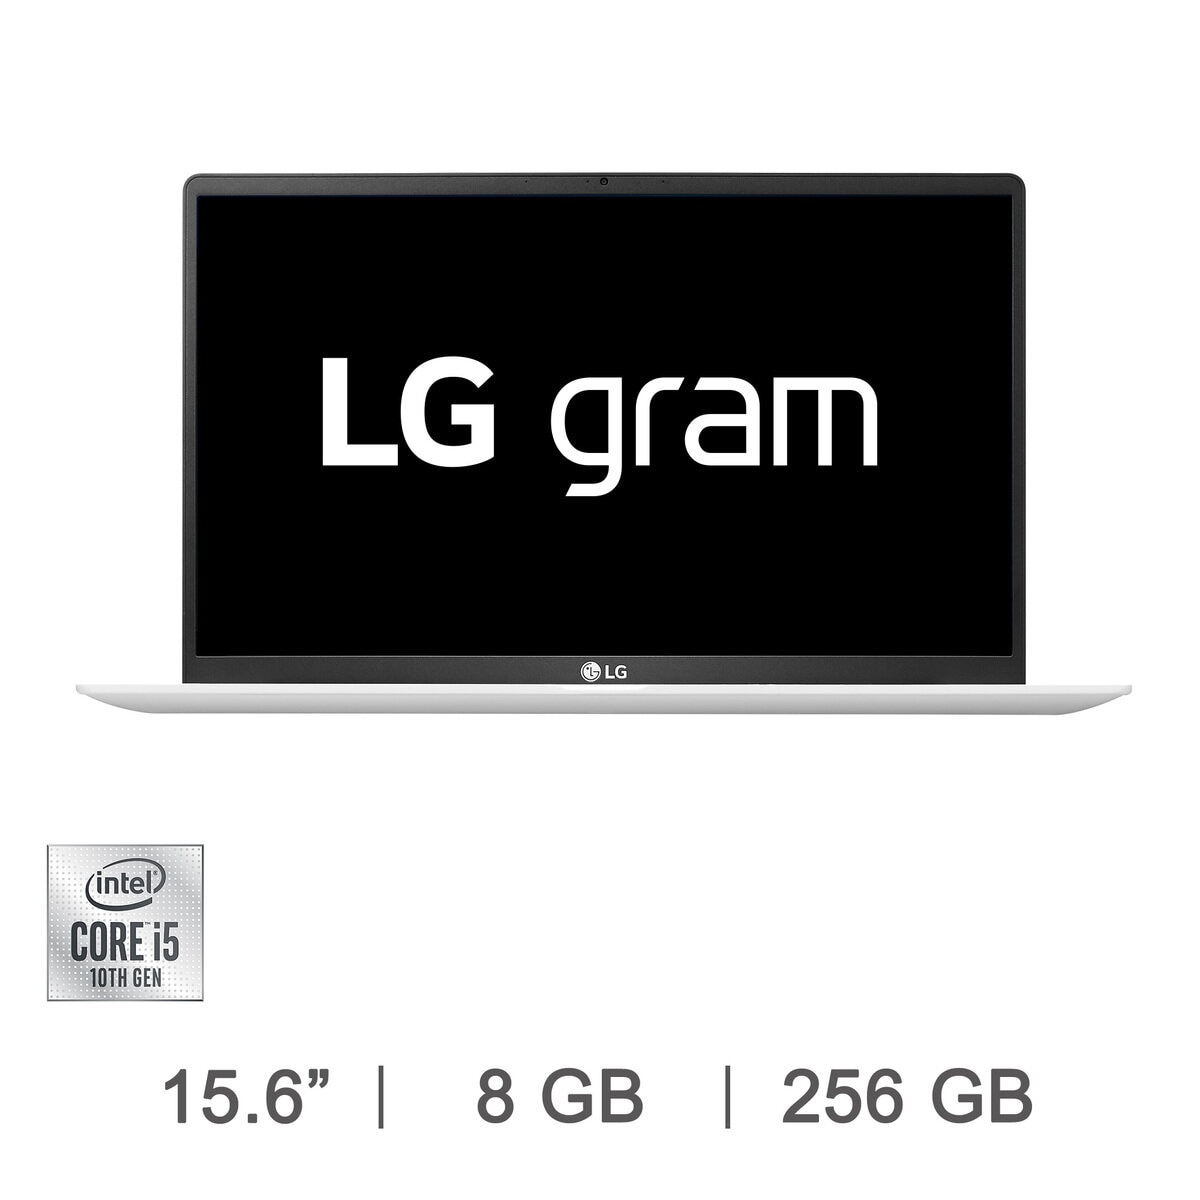 LG gram 15.6インチ ノートPC15Z90N-VR51J1